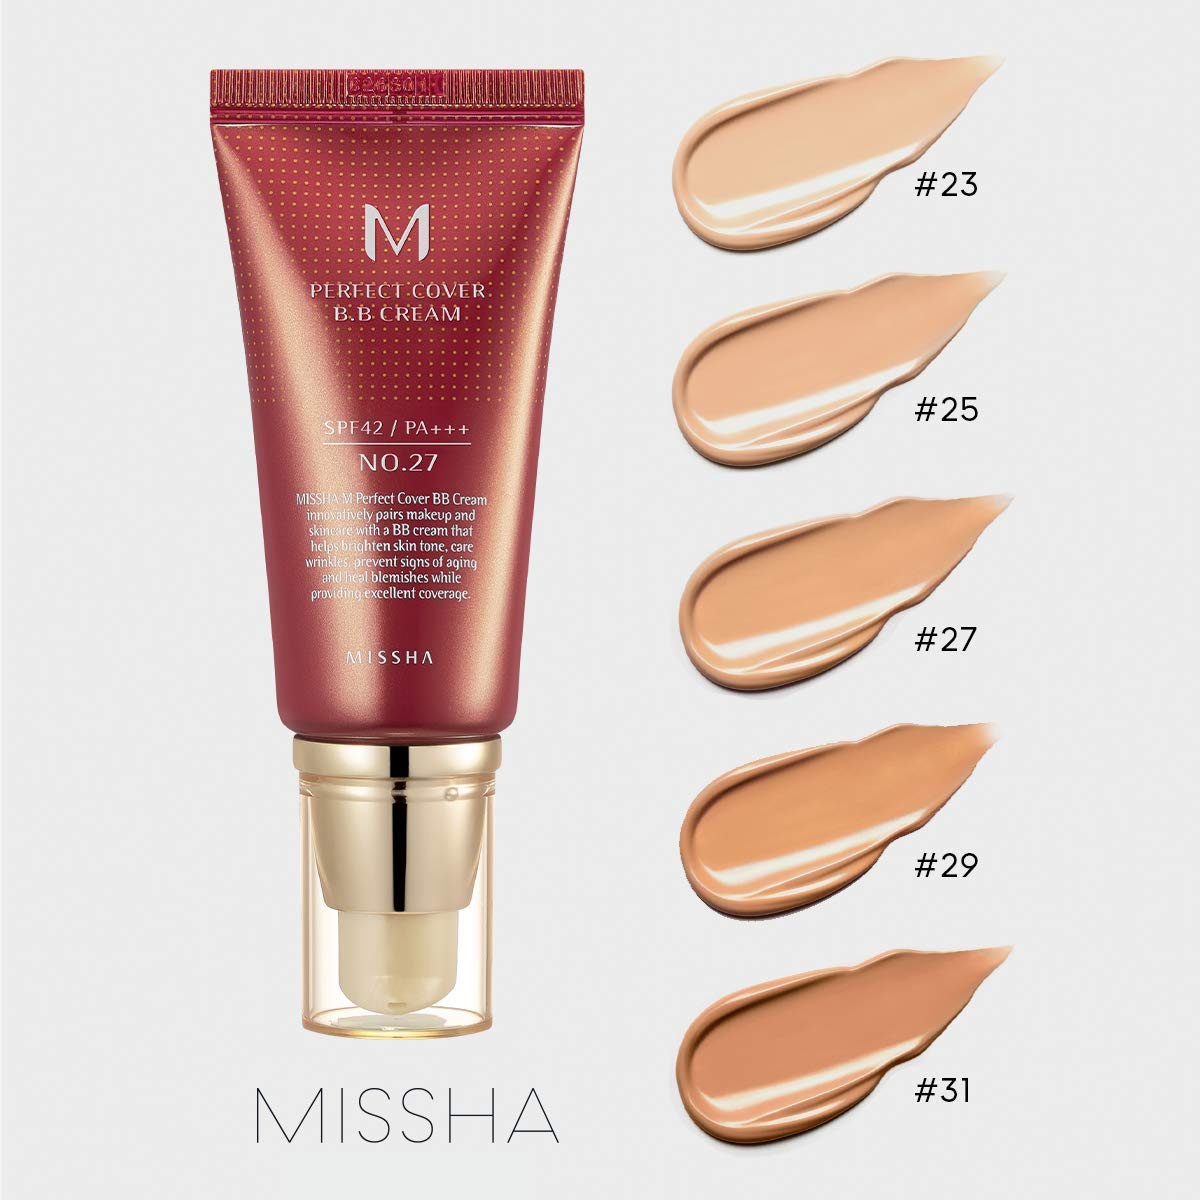 MISSHA M Perfect Cover BB Cream SPF42/PA++